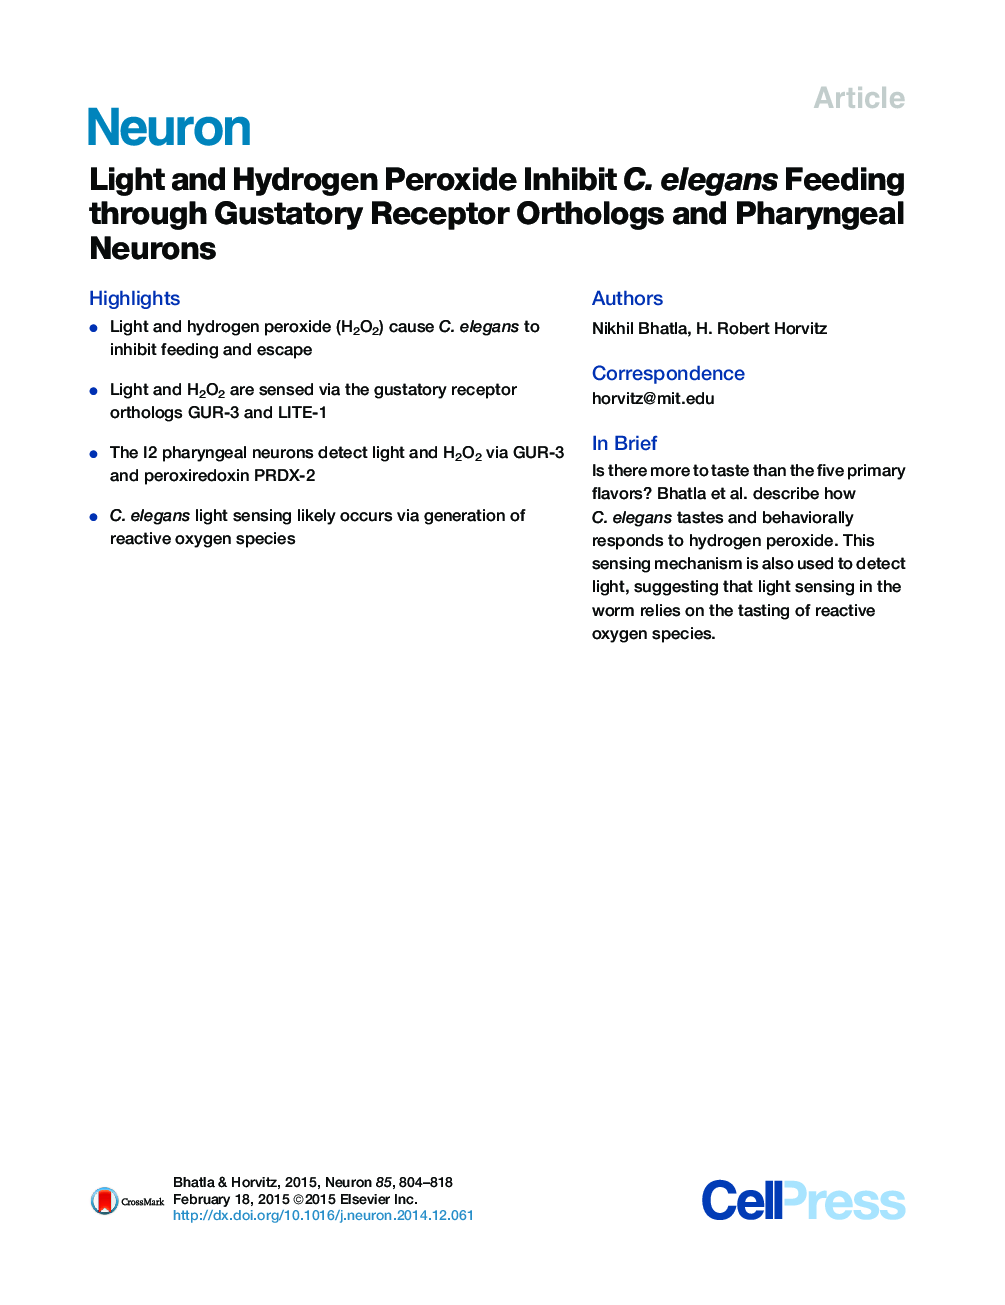 Light and Hydrogen Peroxide Inhibit C. elegans Feeding through Gustatory Receptor Orthologs and Pharyngeal Neurons